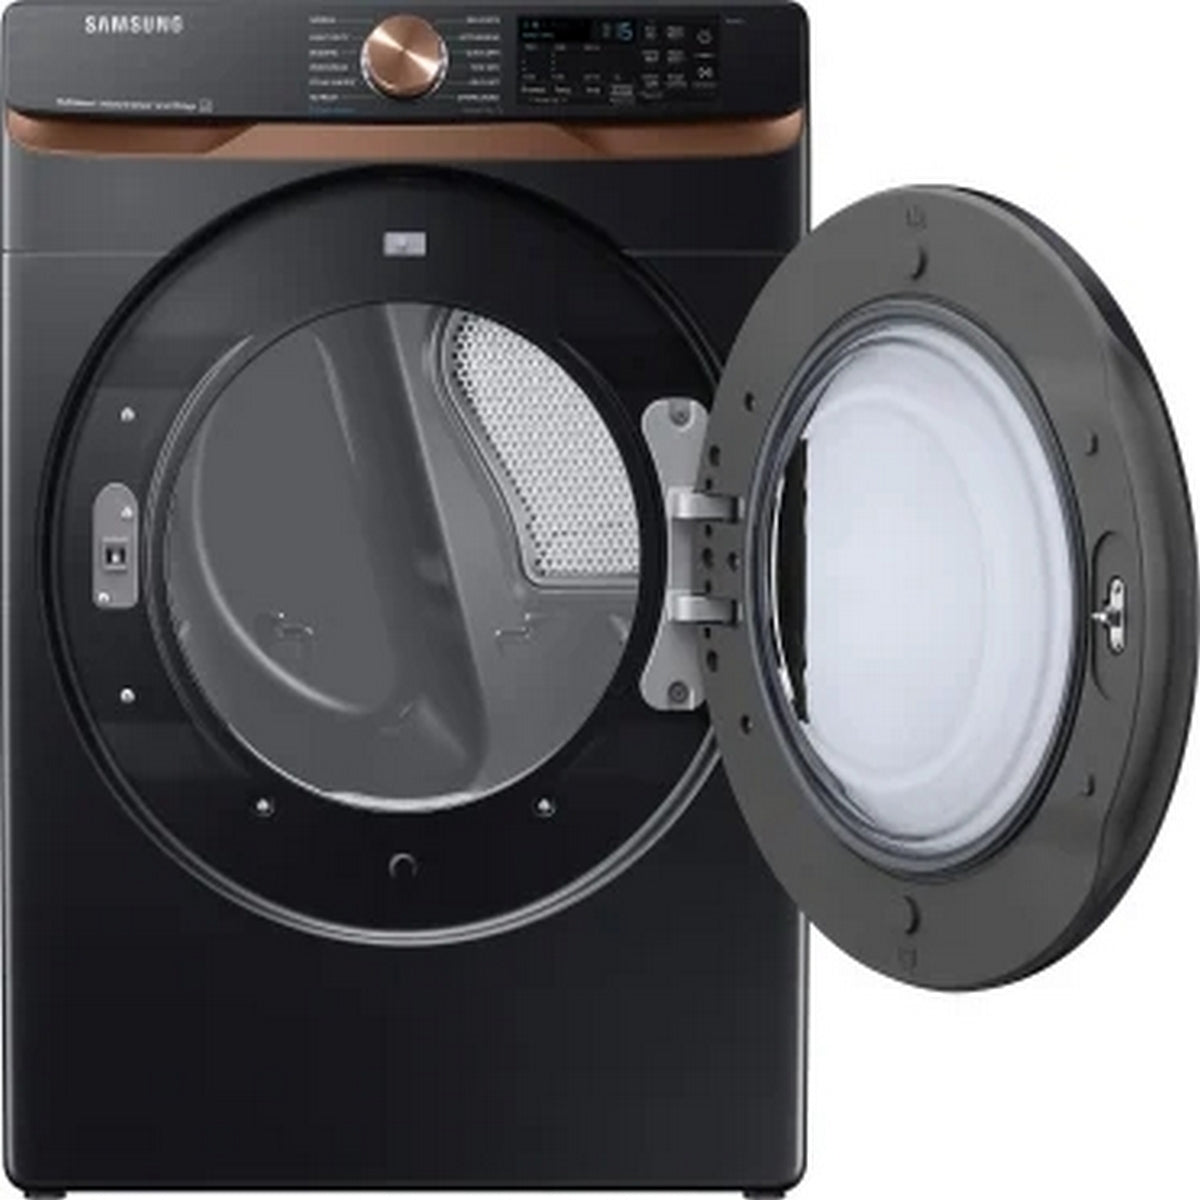 Samsung - 7.5 cu. Ft  Electric Dryer in Black - DVE50BG8300VAC